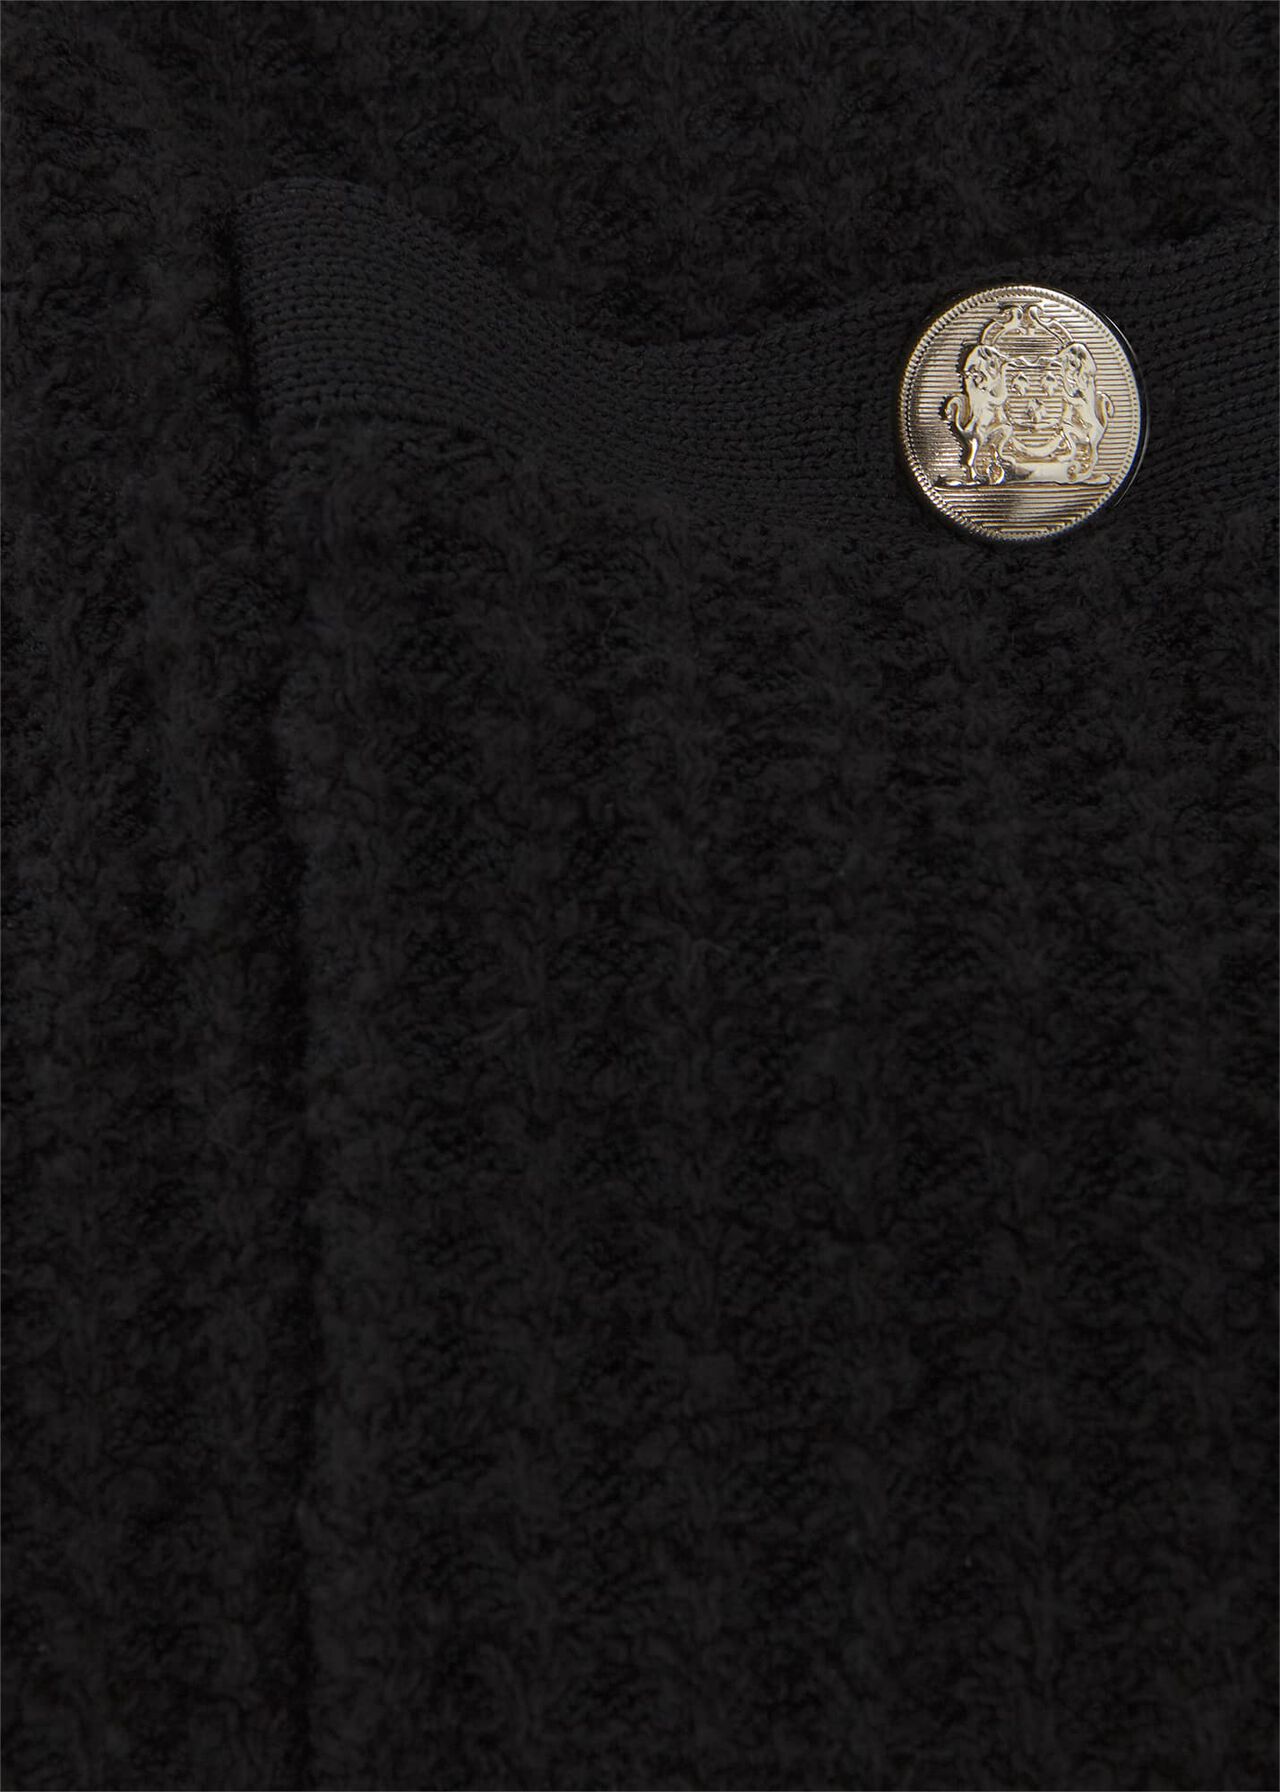 Ainsley Cotton Blend Knit Jacket, Black, hi-res